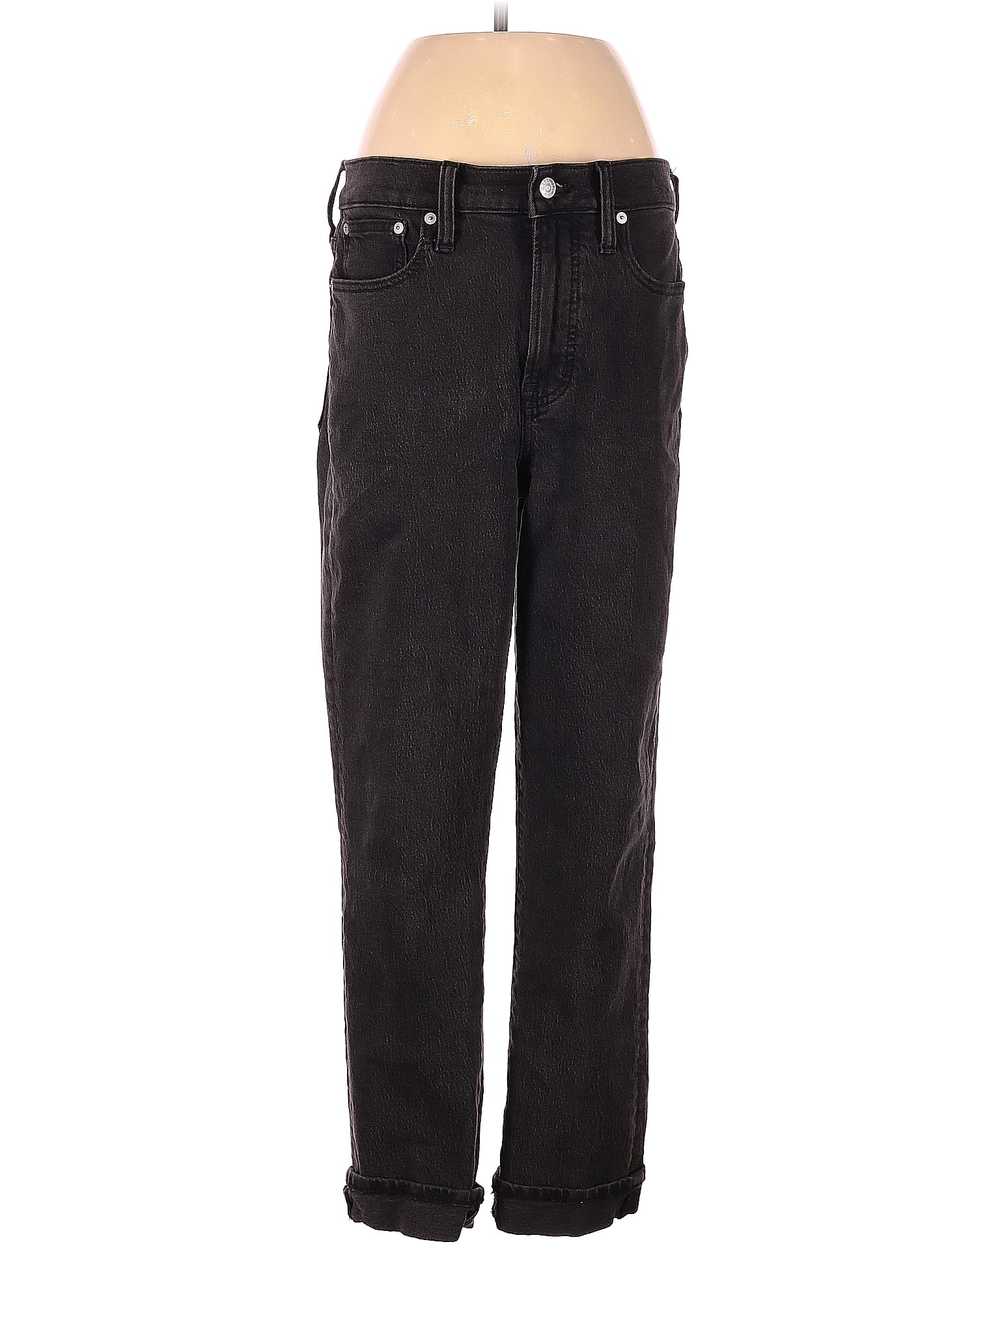 Madewell Women Black Jeans 26W - image 1